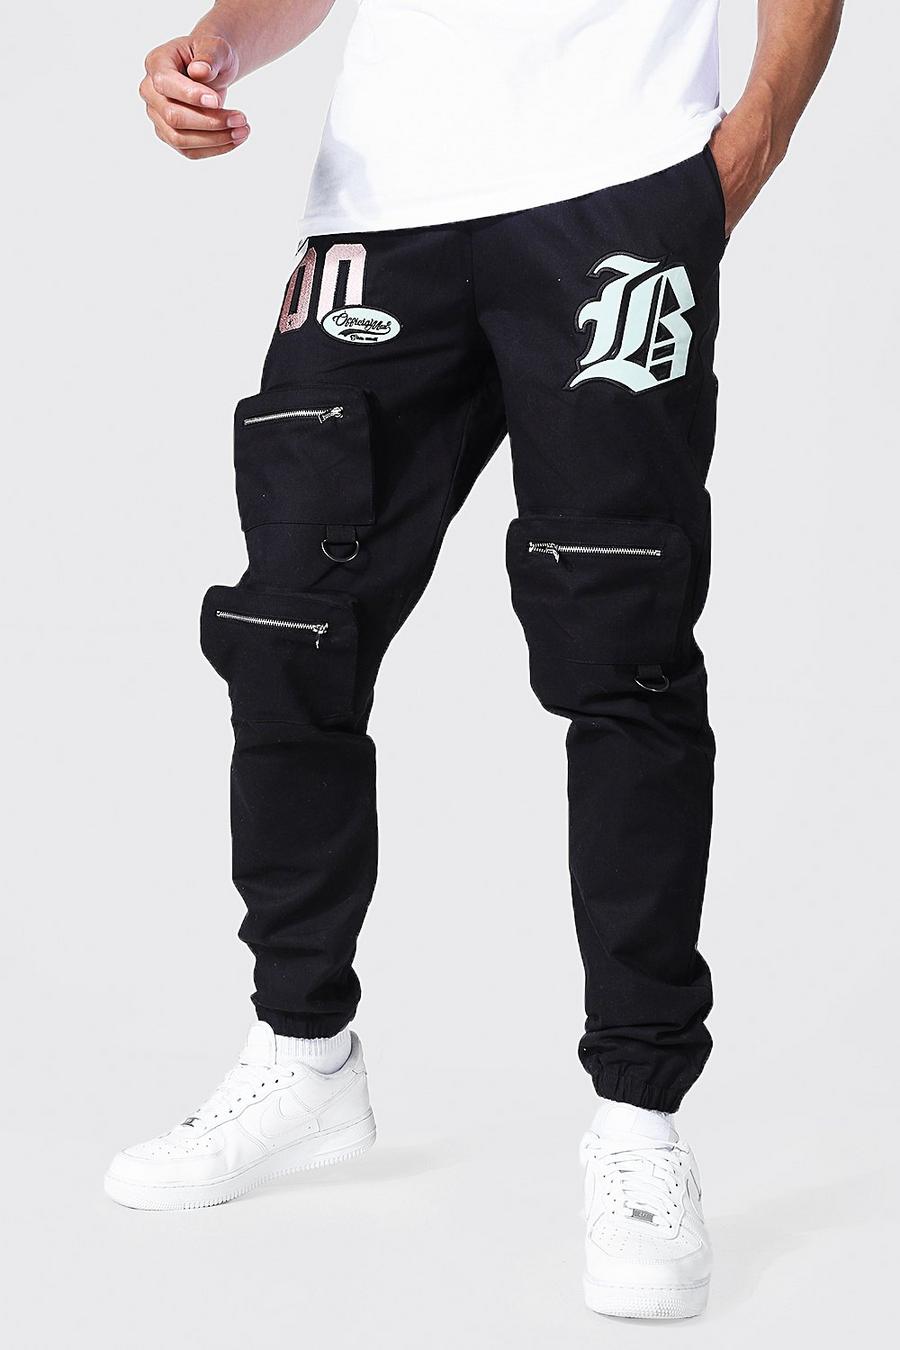 Pantaloni tuta Cargo Tall stile Varsity con tasche frontali, Black nero